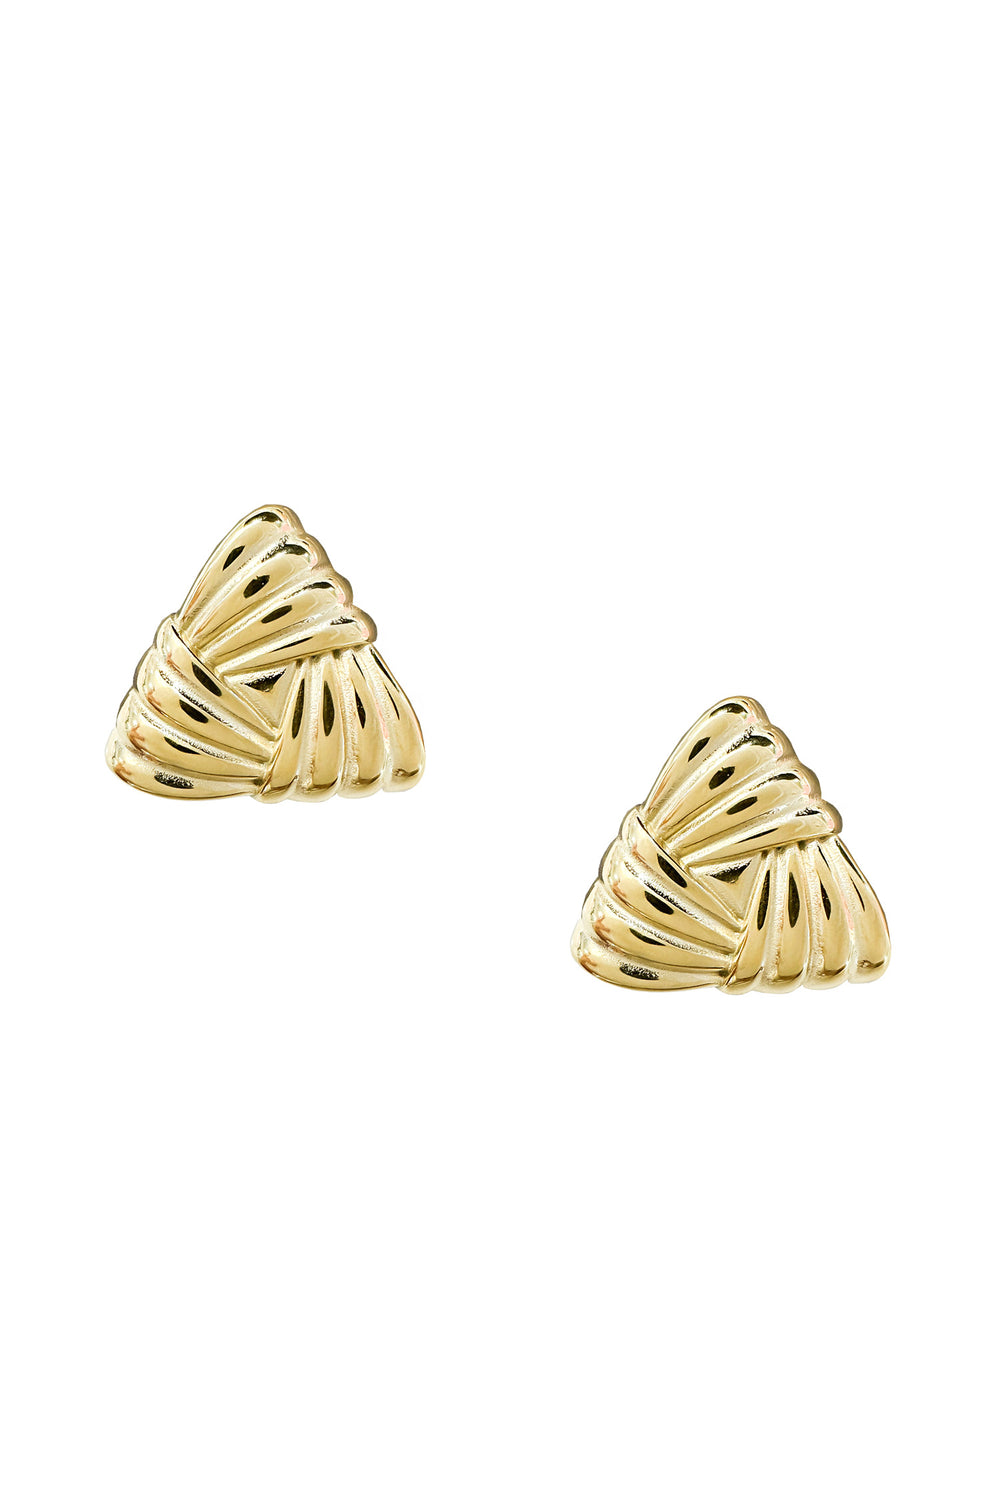 Elyse Gold Triangle Earrings